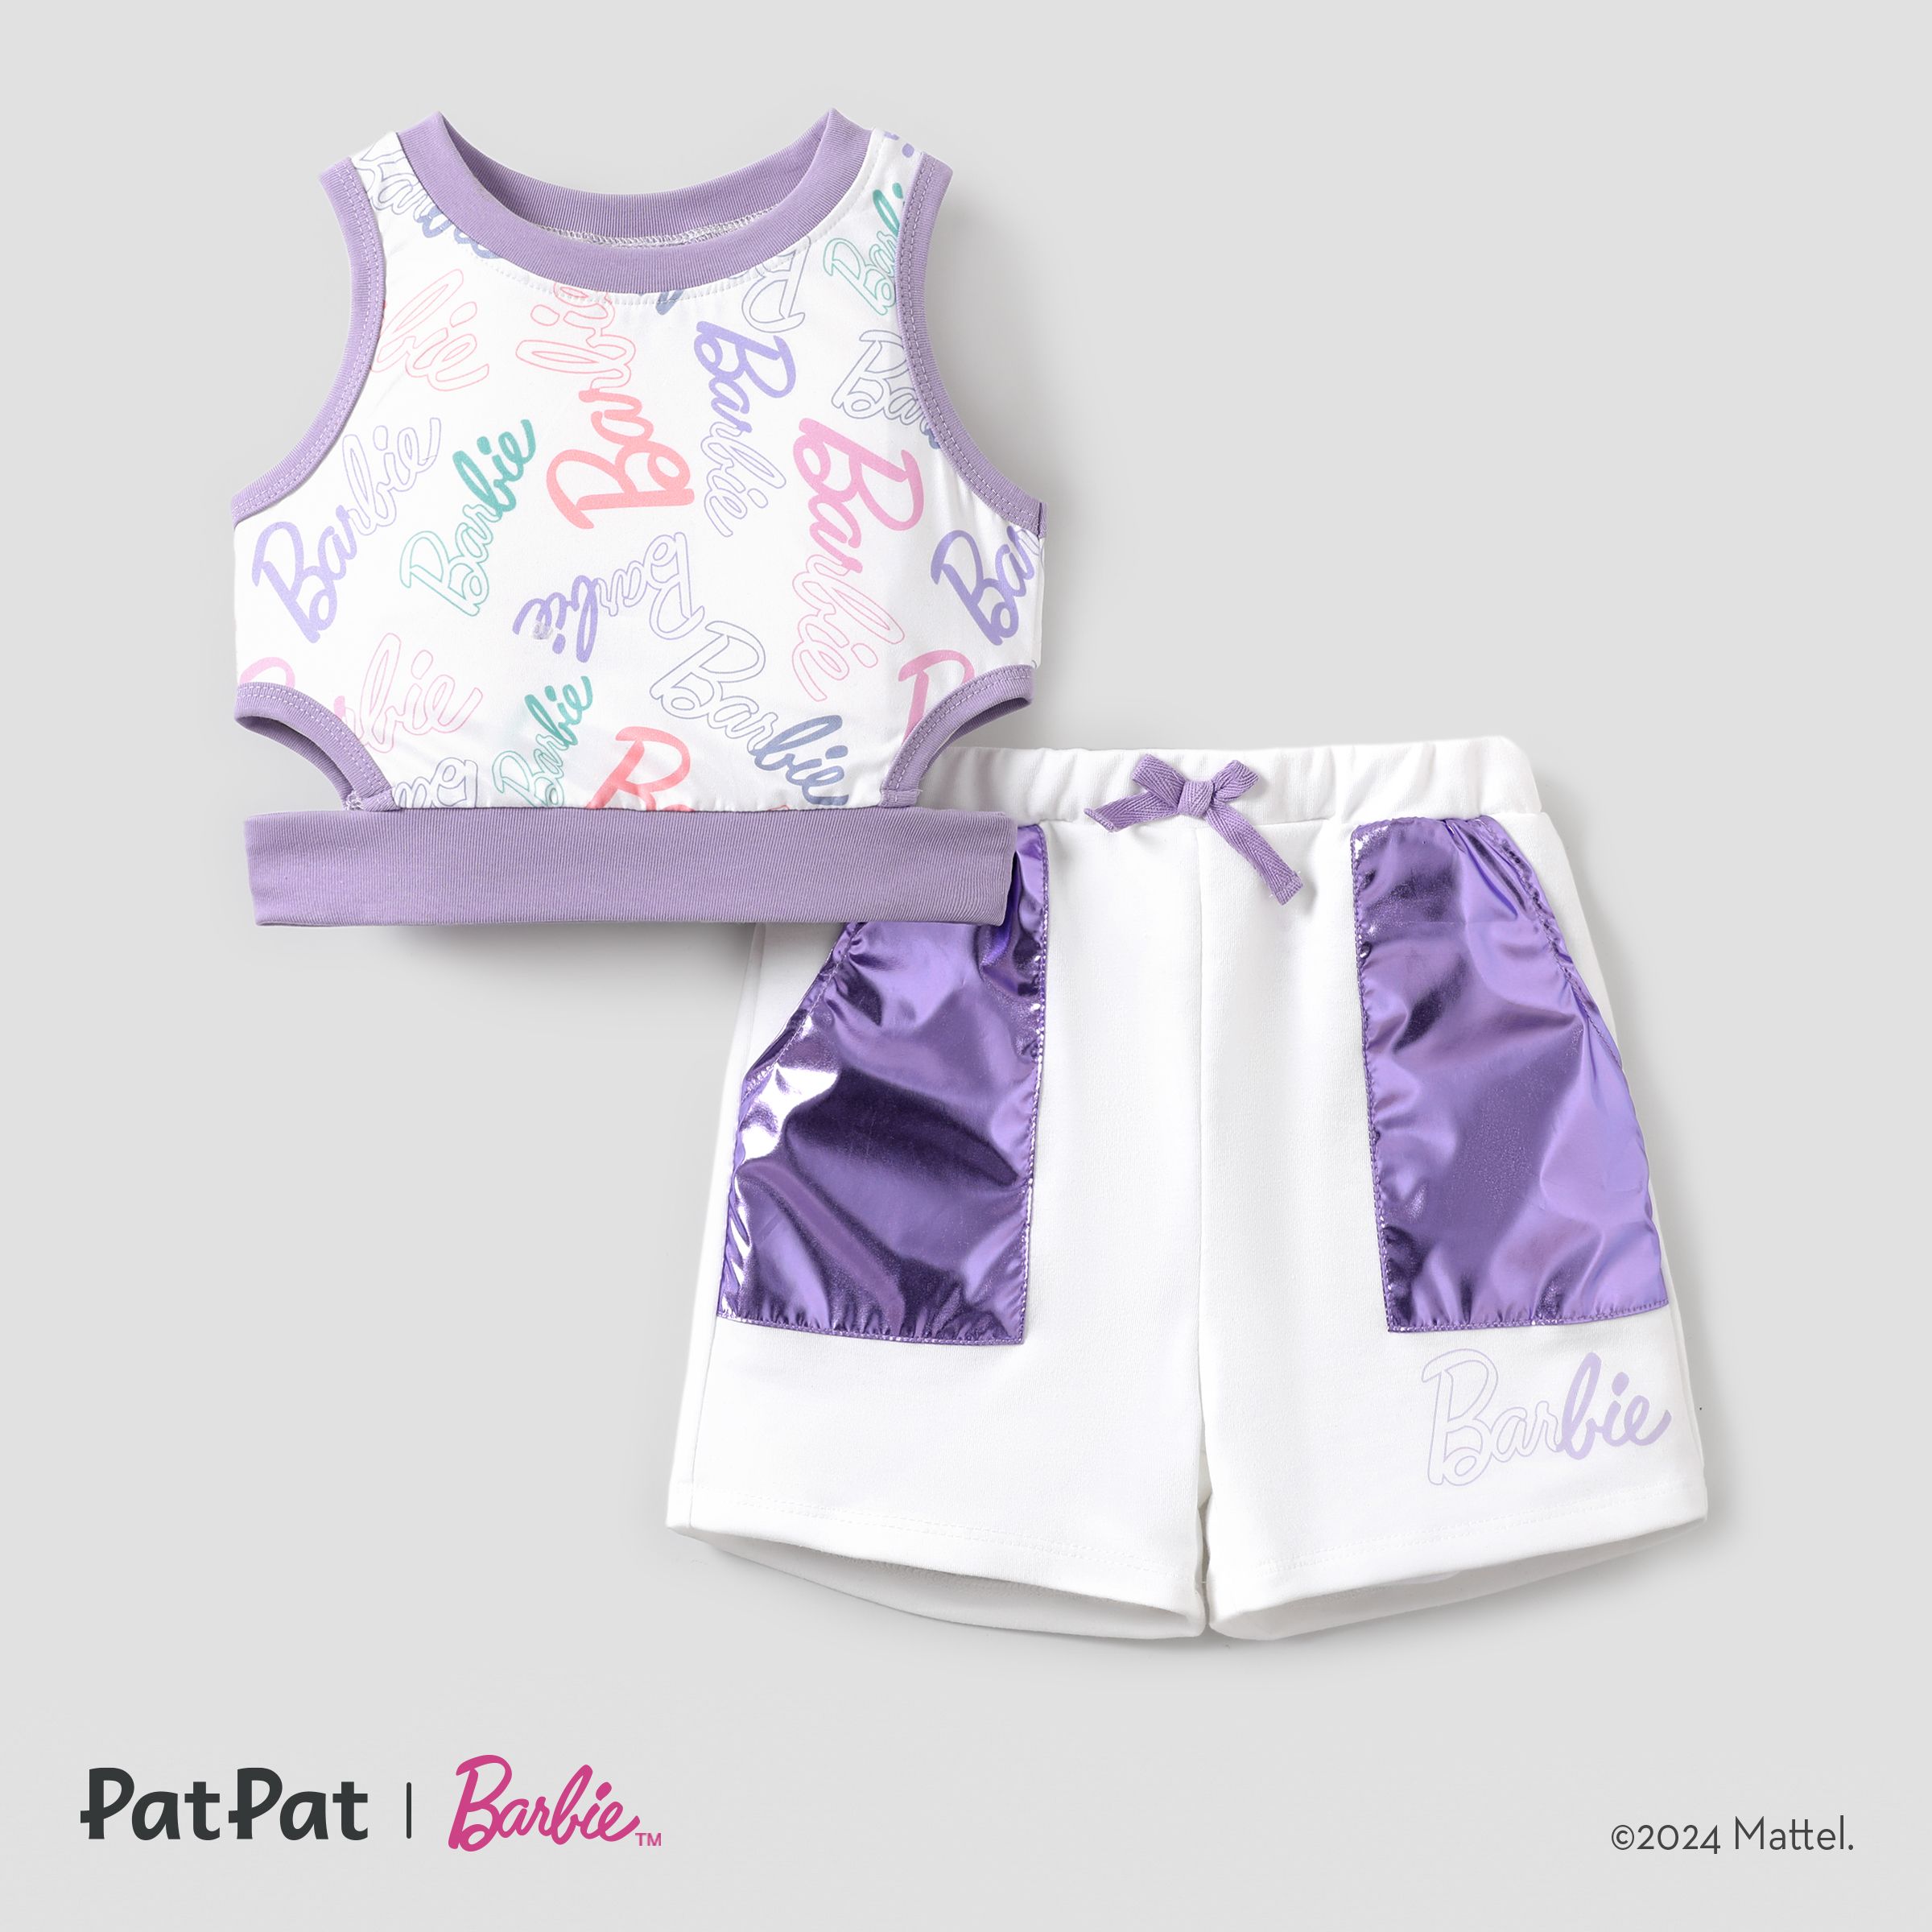 Barbie 2pcs Toddler/Kids Girls Waist-twist/cutout Tank Top with Pocket Shorts Set